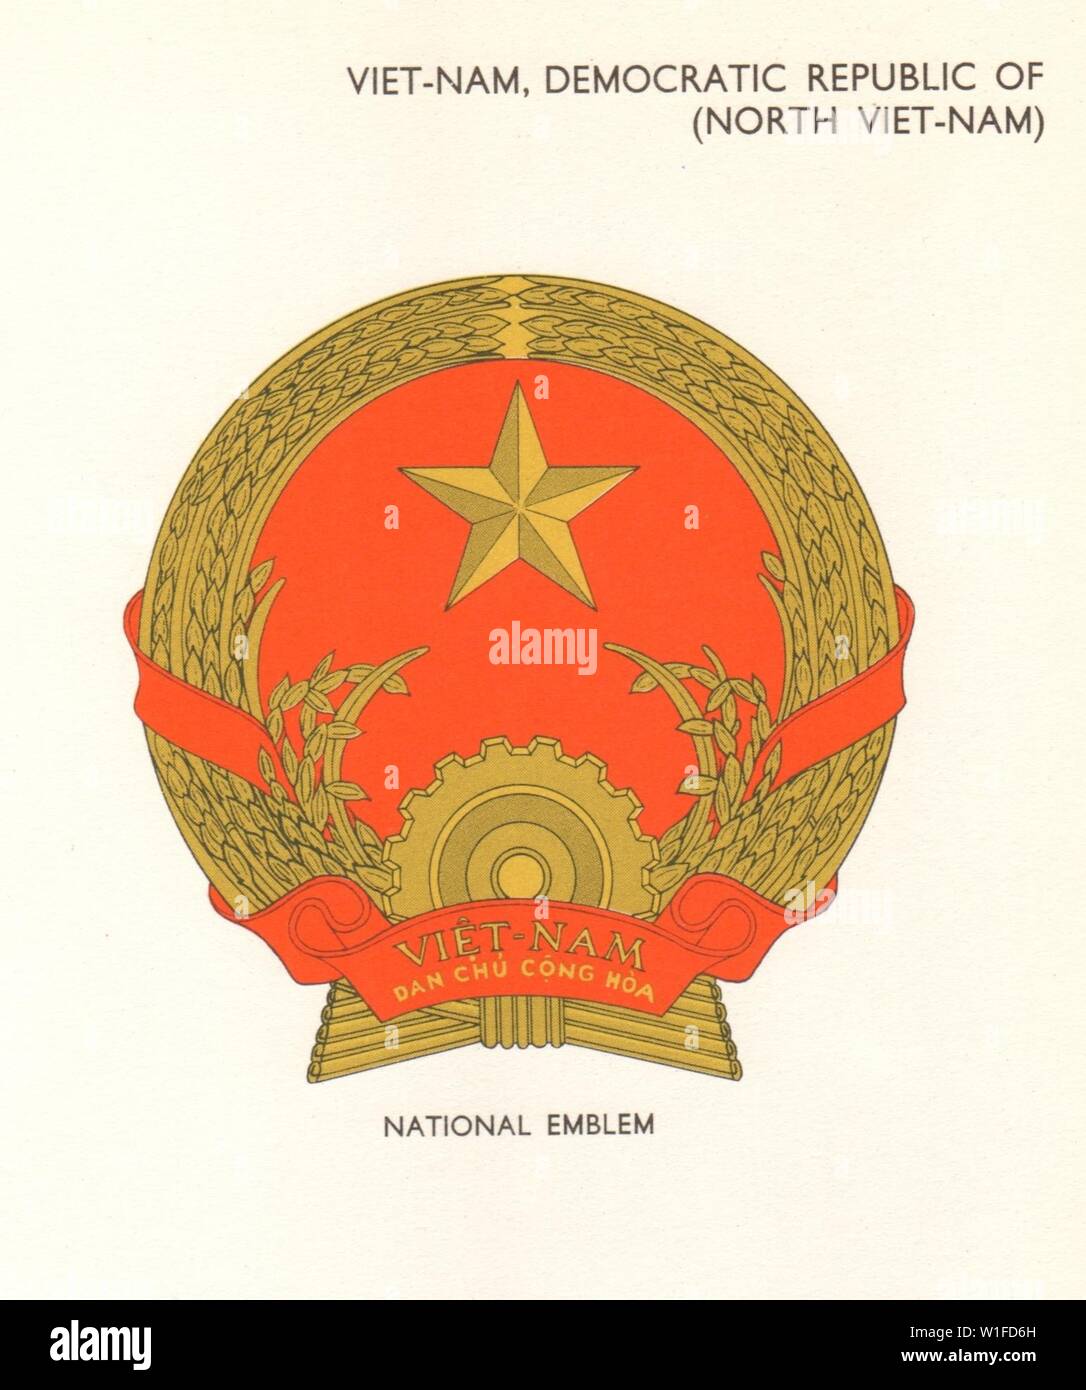 VIETNAM FLAGS. North Viet-Nam, Democratic Republic of. National Emblem 1964 Stock Photo